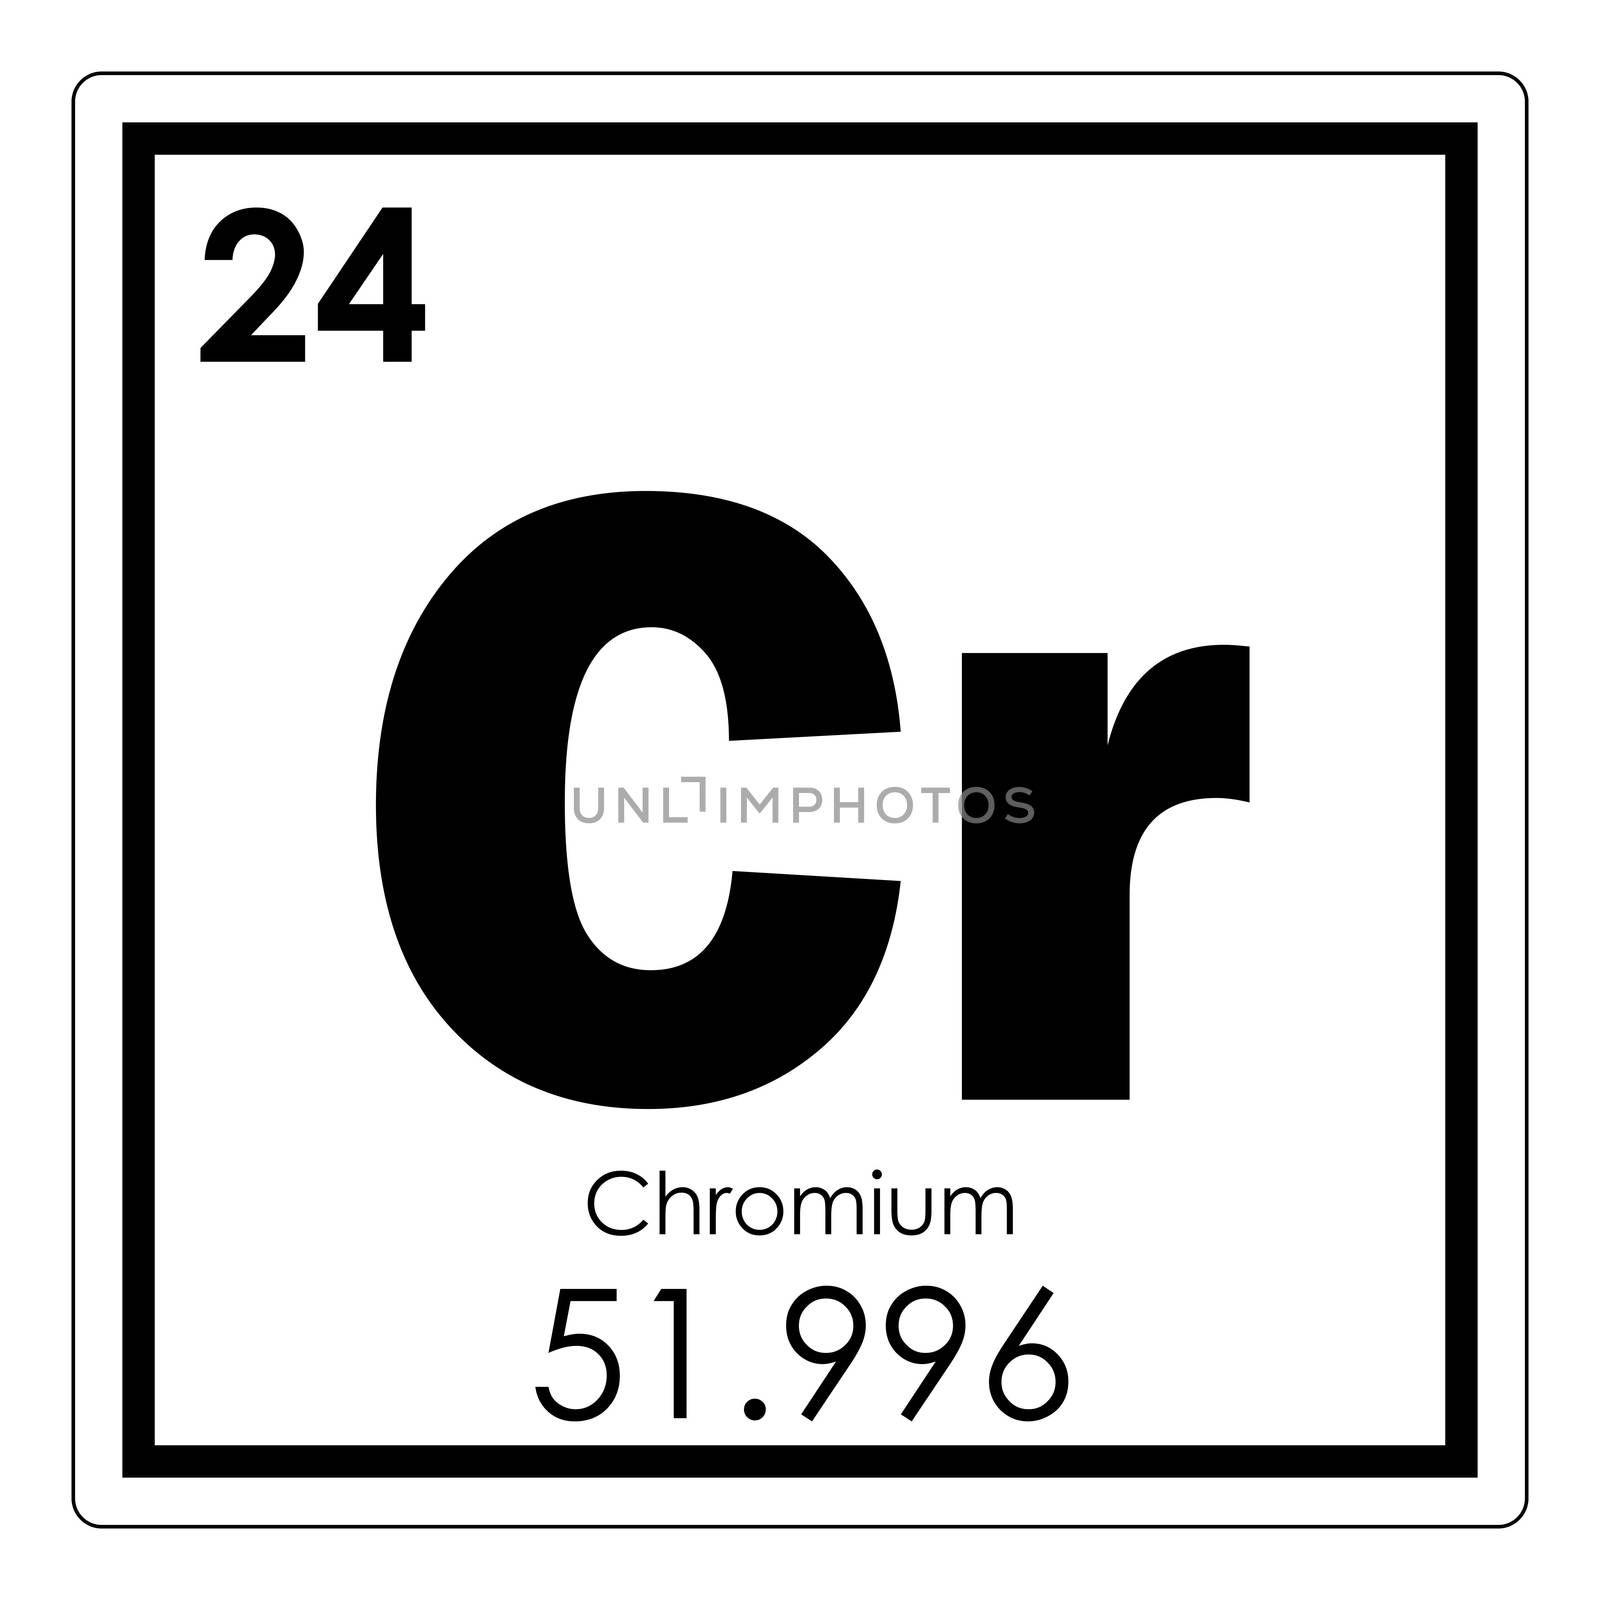 Chromium chemical element by tony4urban